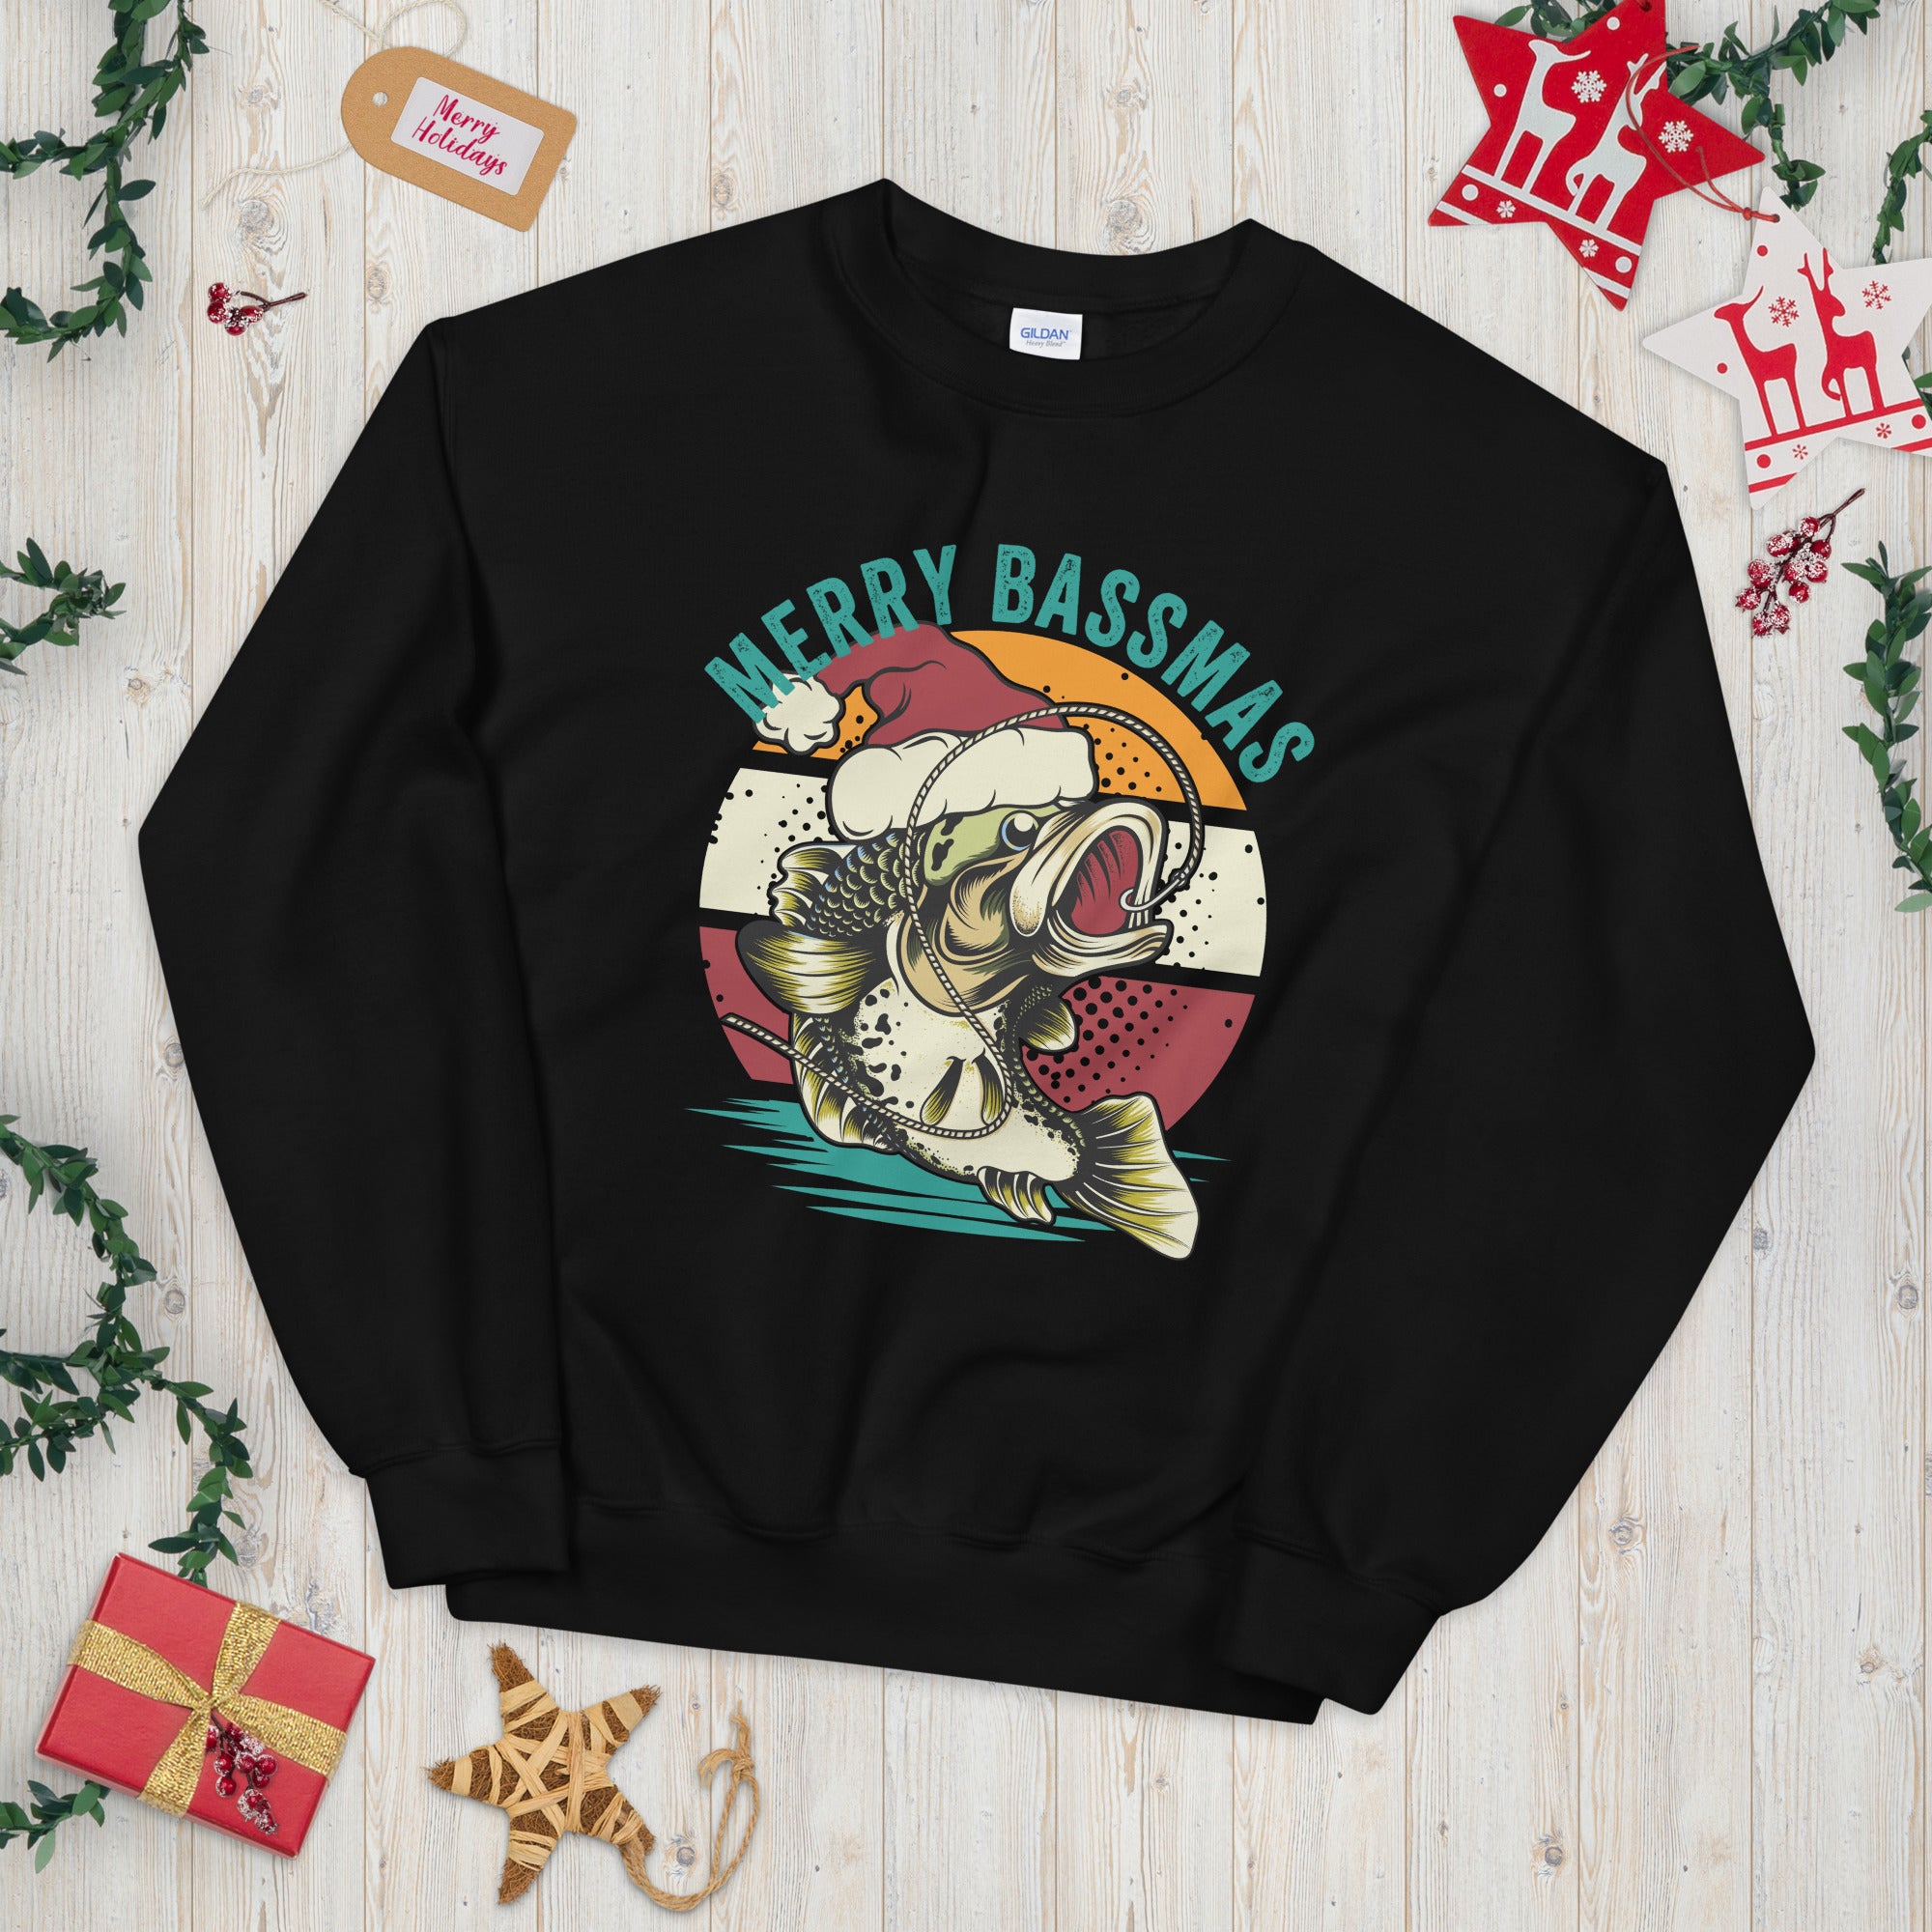 Bass Fishing Sweatshirt, Christmas Bass Fishing Shirt, Xmas Fishing Gift, Funny Fishing Sweater, Christmas Fishing Gifts, Fisherman Gift Tee